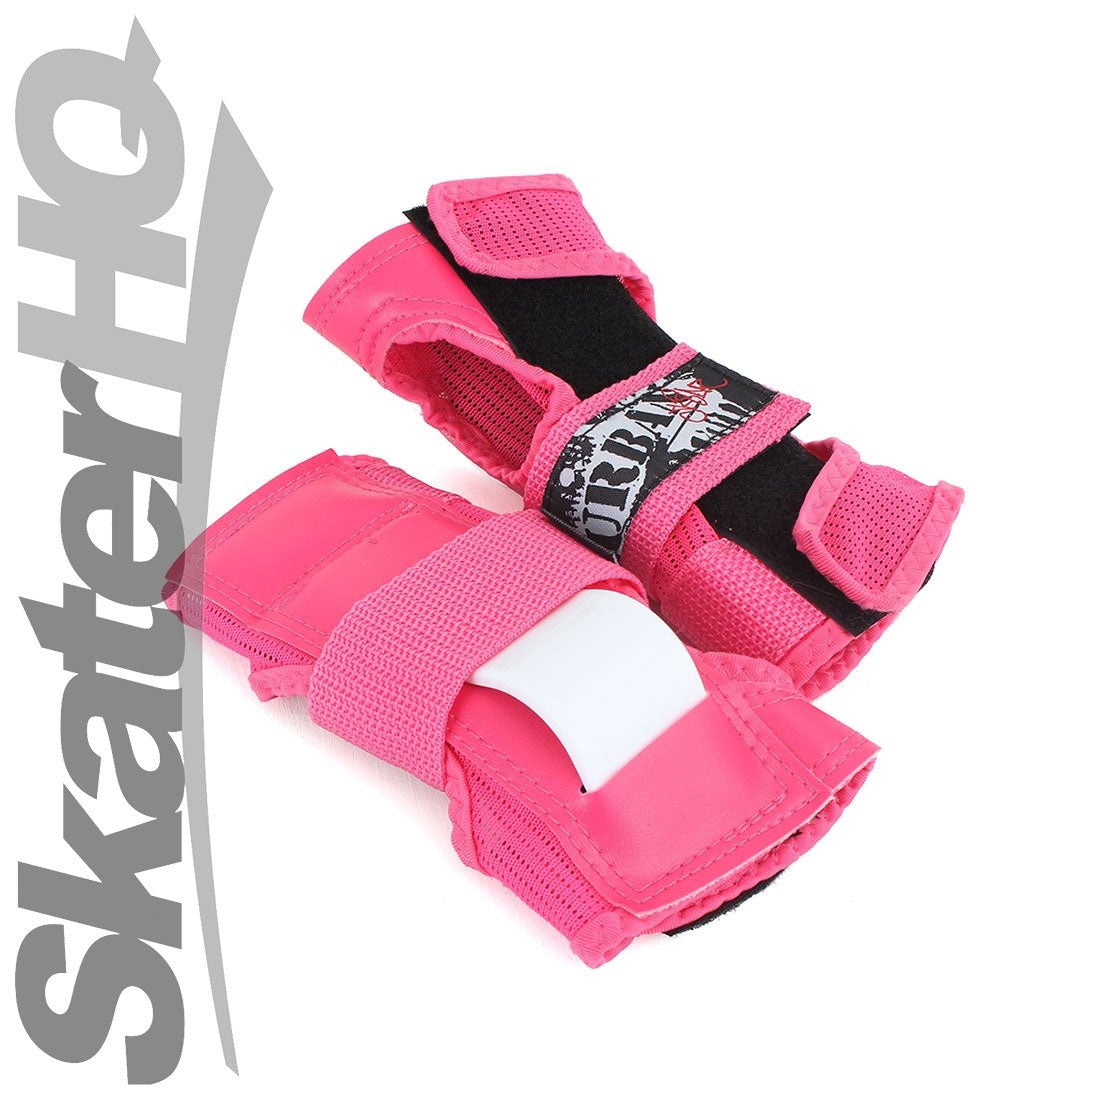 Urban Skater Wrist Guard - Pink - Junior Protective Gear